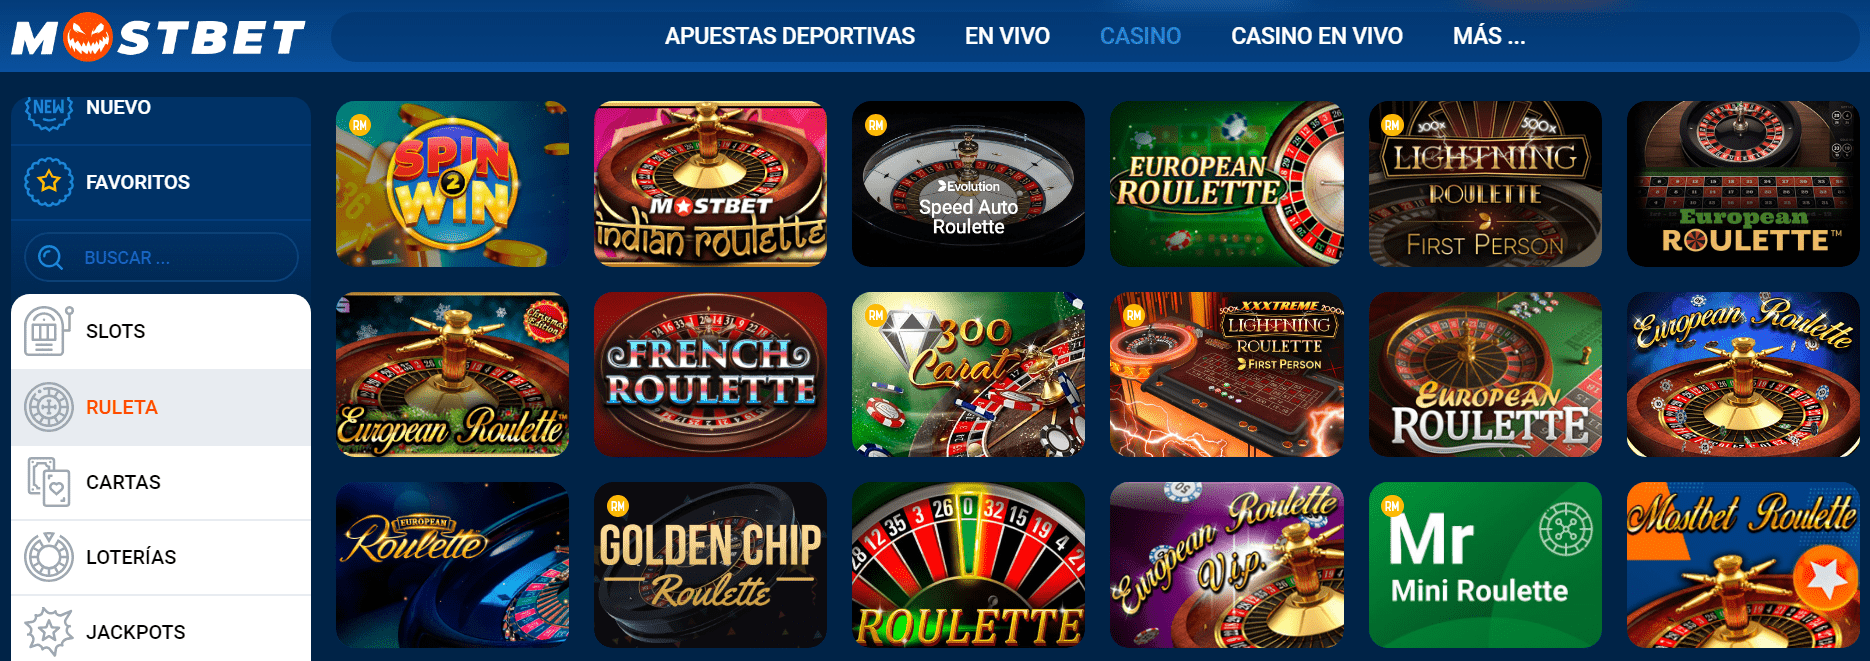 Ruleta en Mostbet casino